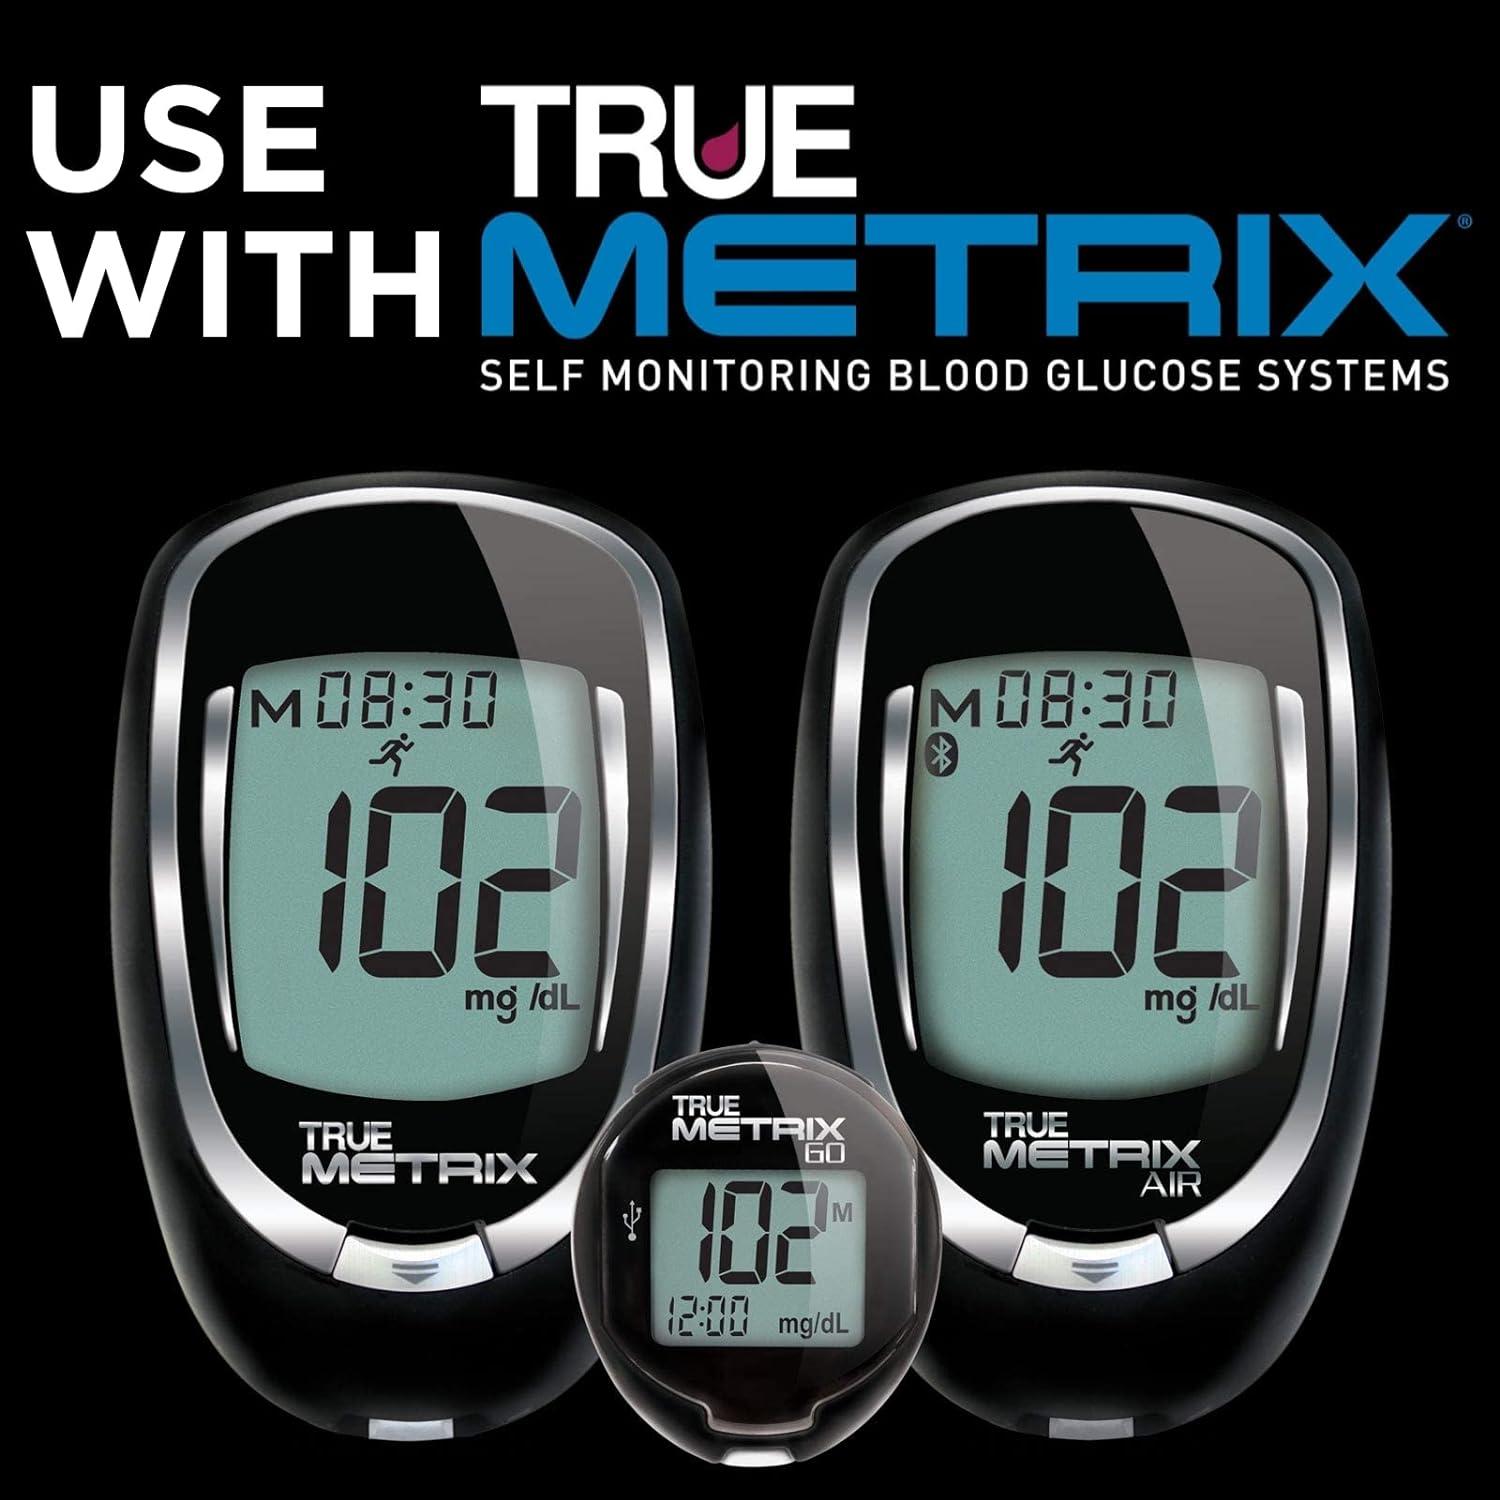 TRUE METRIX® AIR Self-Monitoring Blood Glucose System